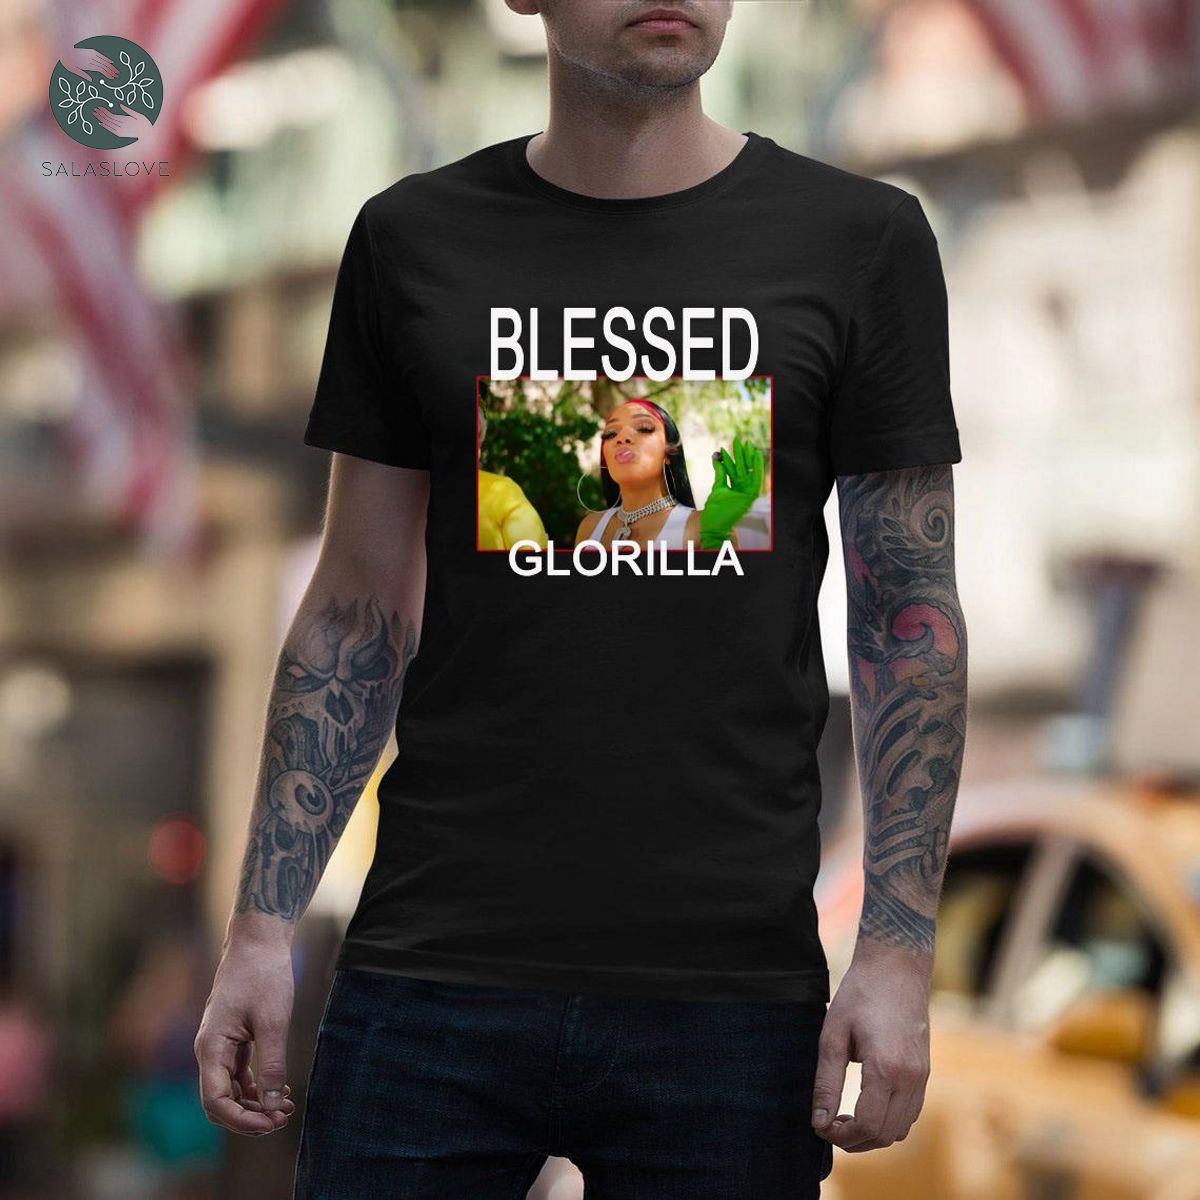 Glorrilla - Blessed New Single Shirt